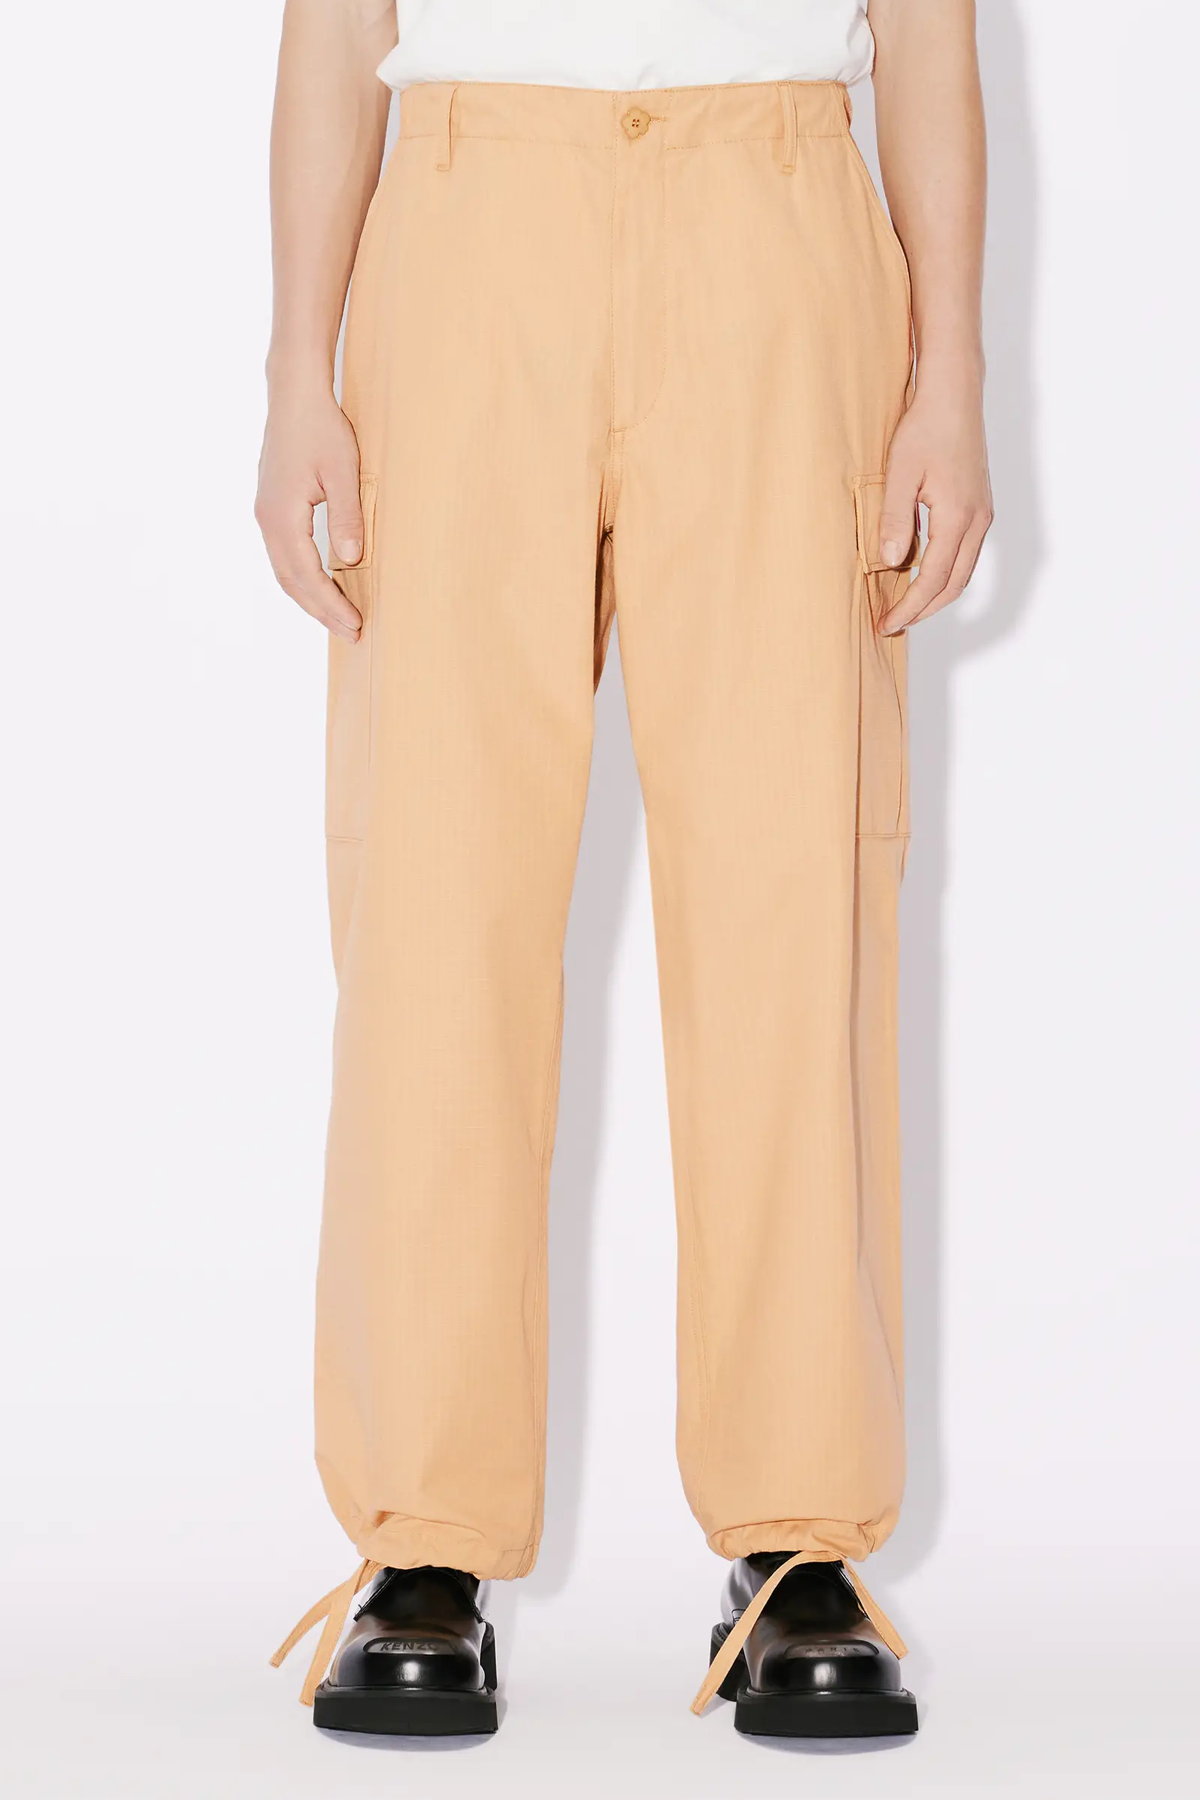 Kenzo Cargo Workwear Pants - Camel